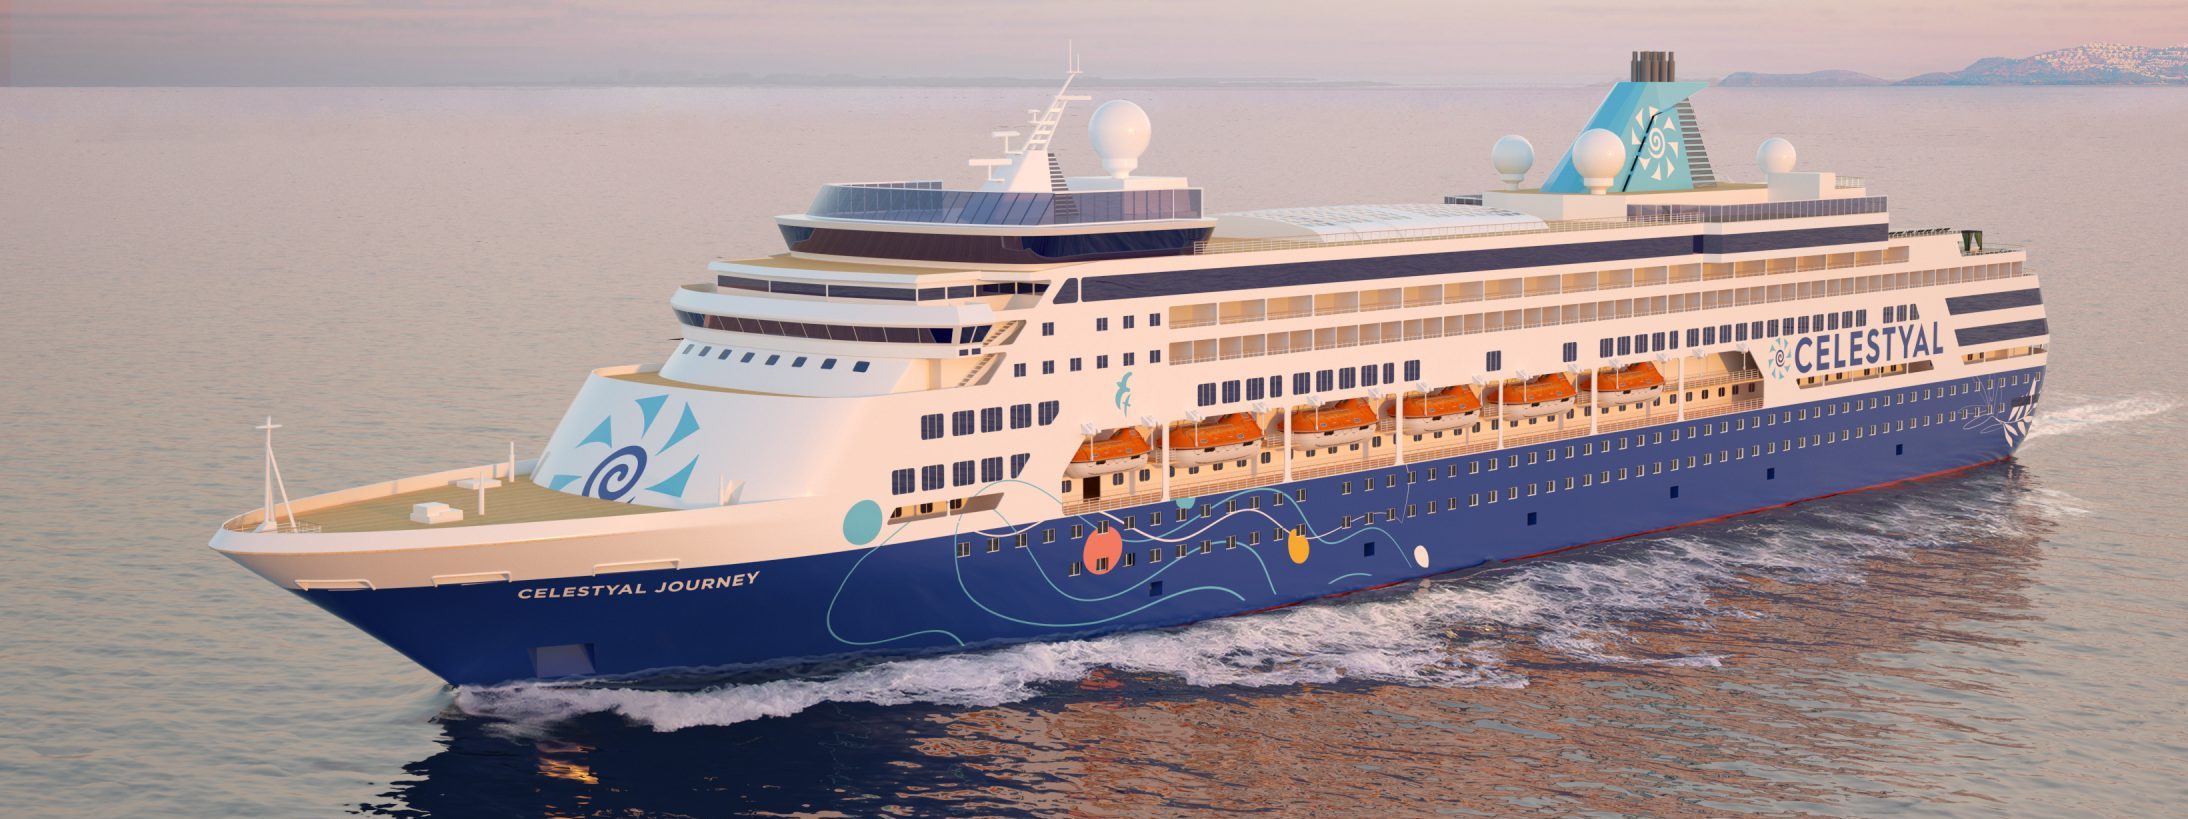 celestyal cruise line jobs